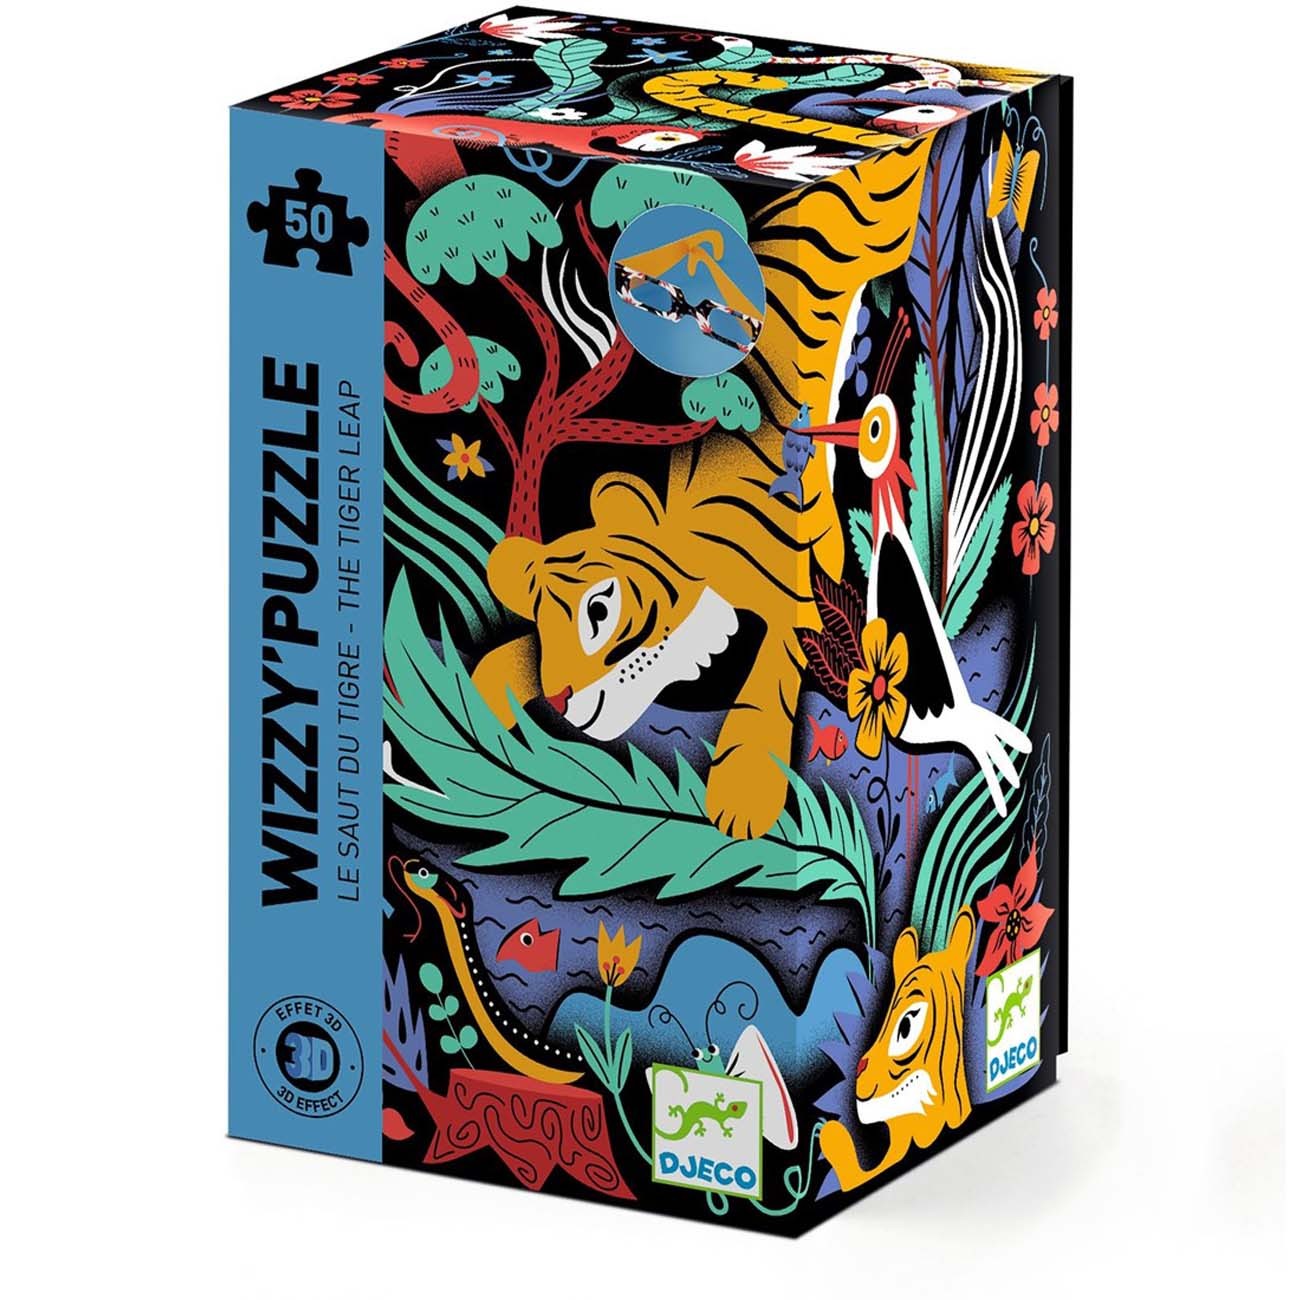 Met Opera Shop | Wizzy The Tiger Leap 3D Puzzle (50 PIECES)